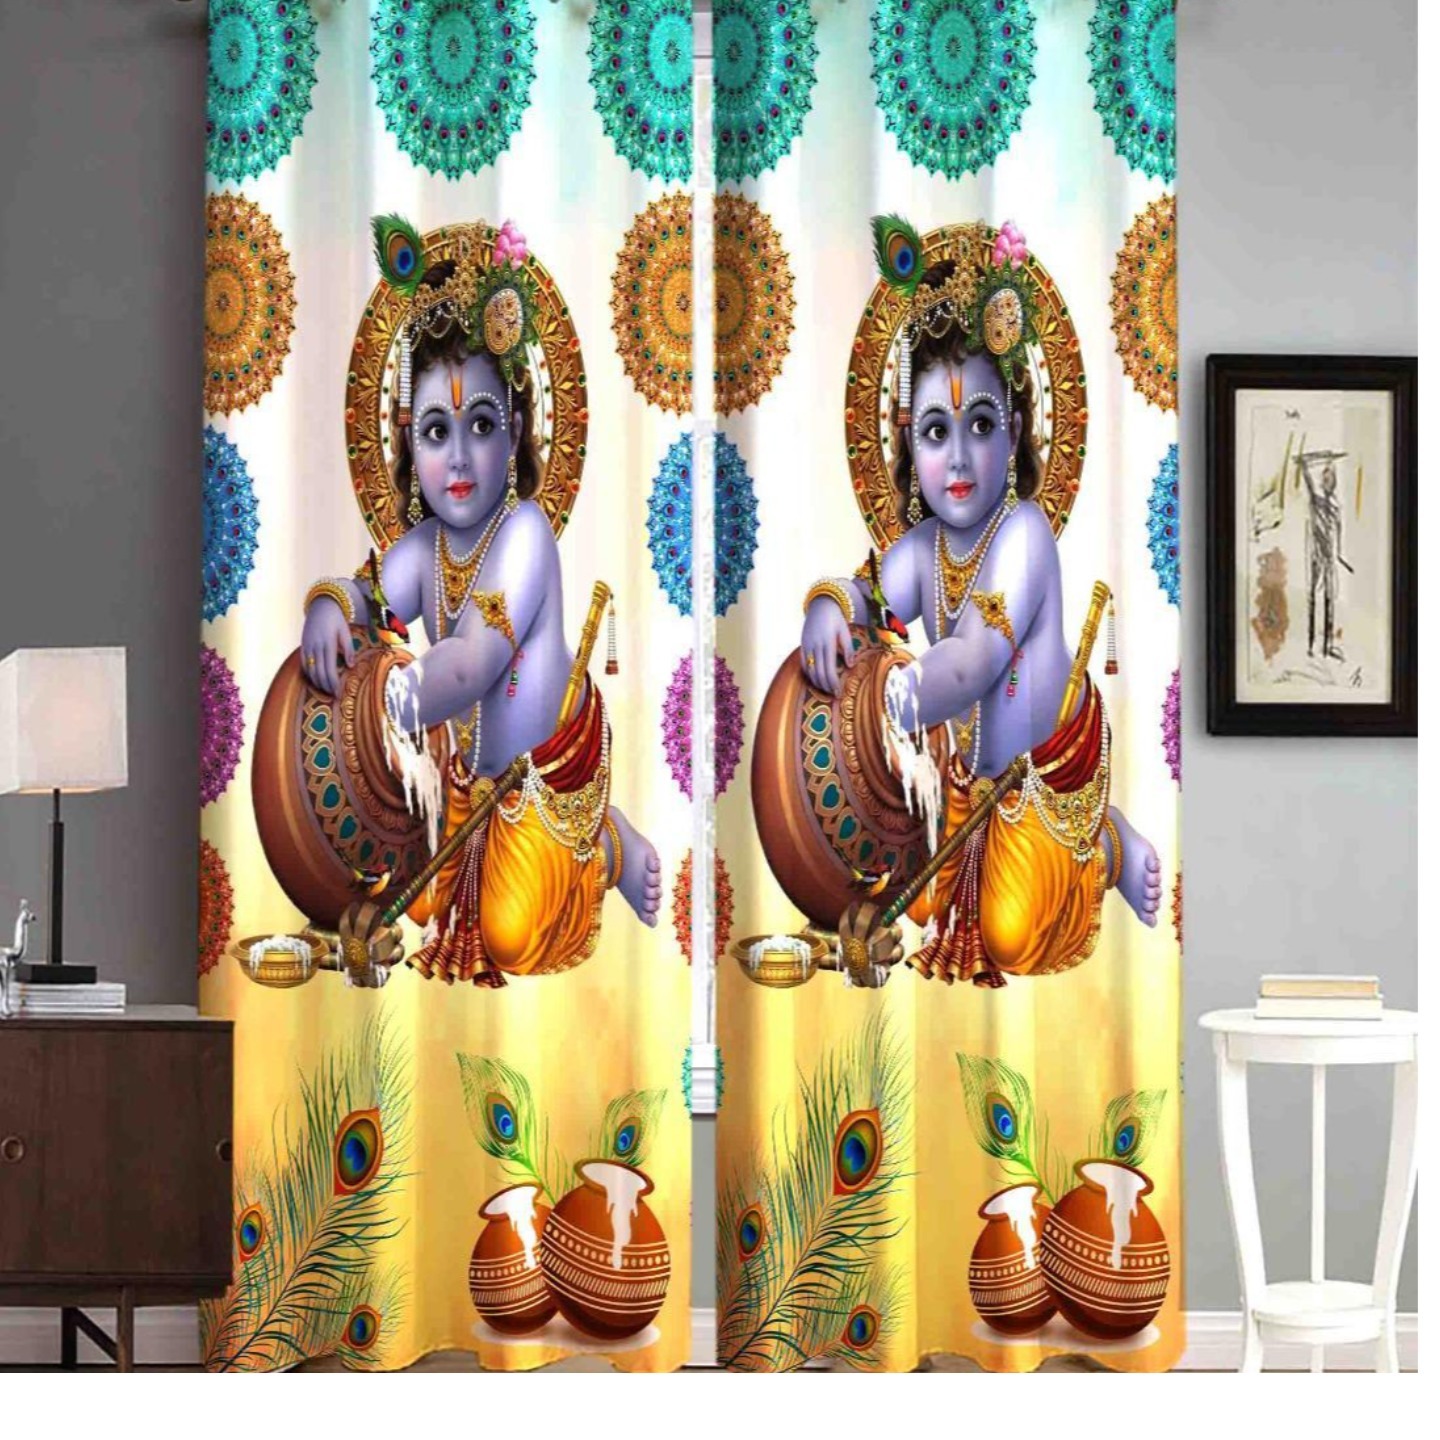 Handtex Home Digital Printed Curtain 3D Themed Polyester Curtains for Home Decor  Eyelet Grommet Panels for Living Room Balcony Bedroom, 4 x 9 Feet,Set of 2pcs Krishna Ji